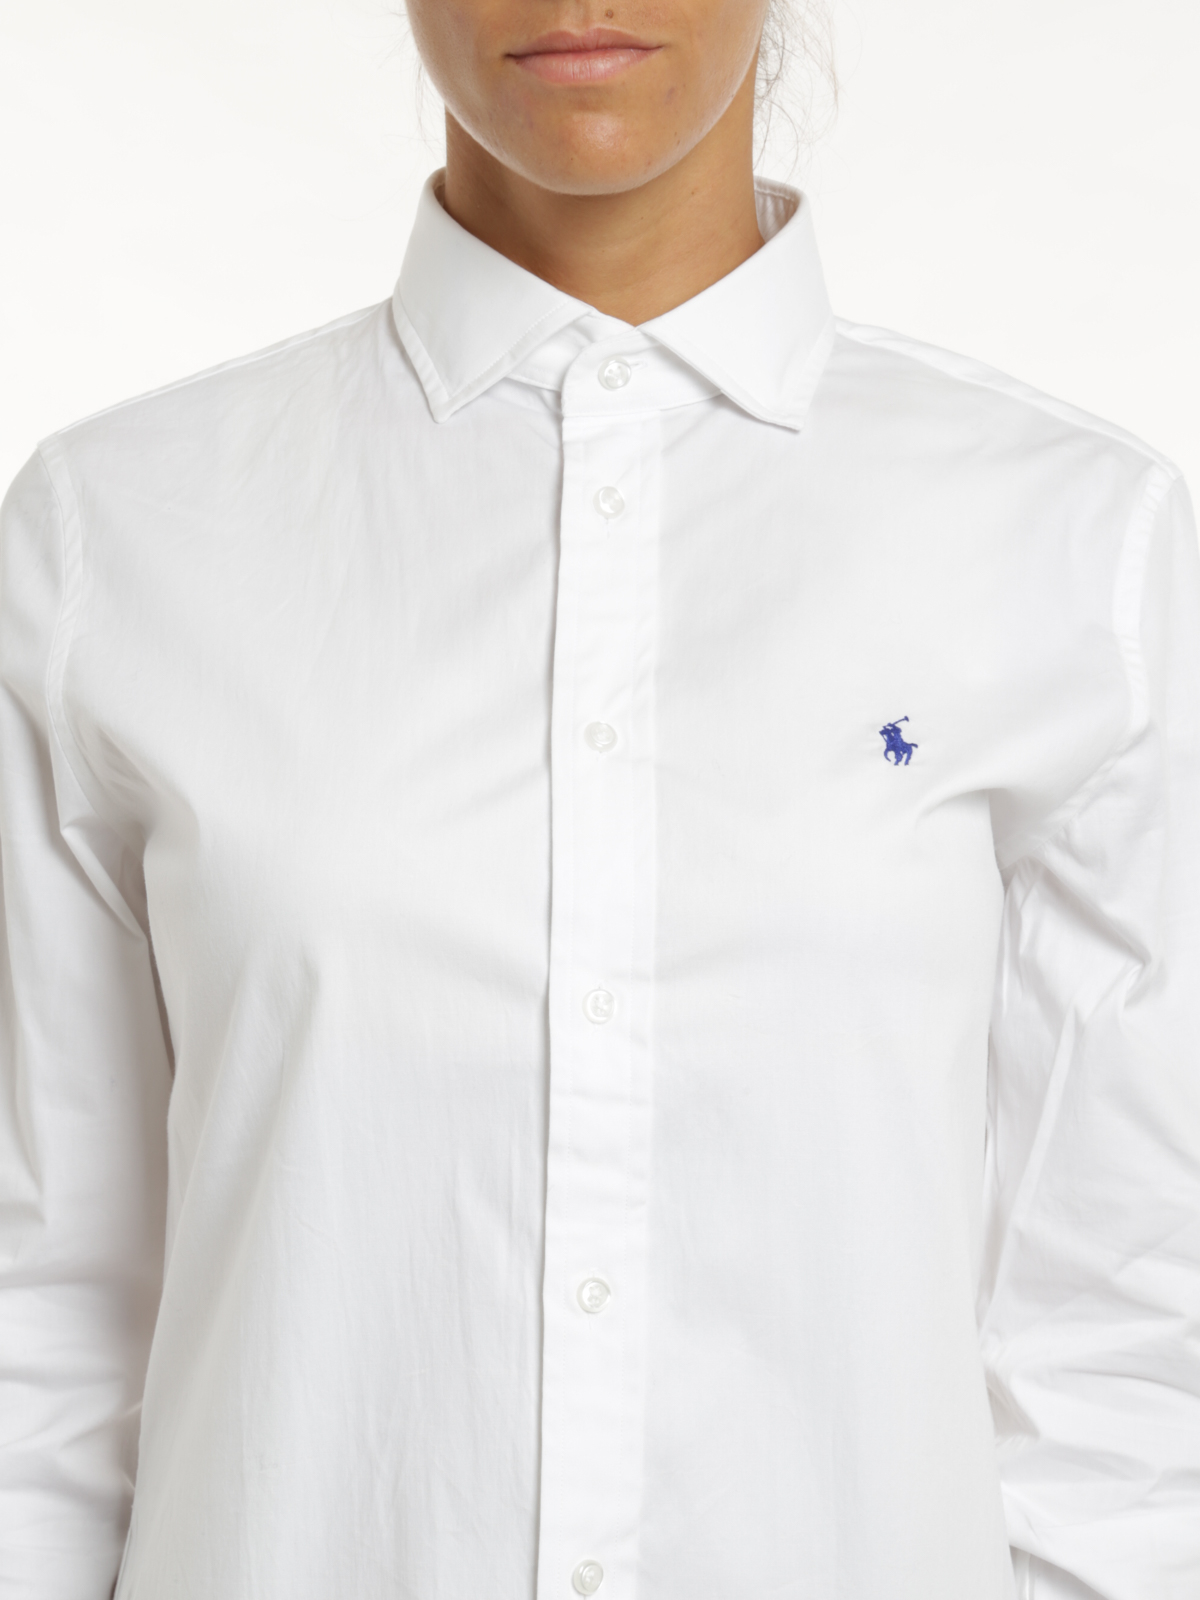 soplo Demonio robo Camisas Polo Ralph Lauren - Camisa Blanca Para Mujer - V33IG270BG207B1426